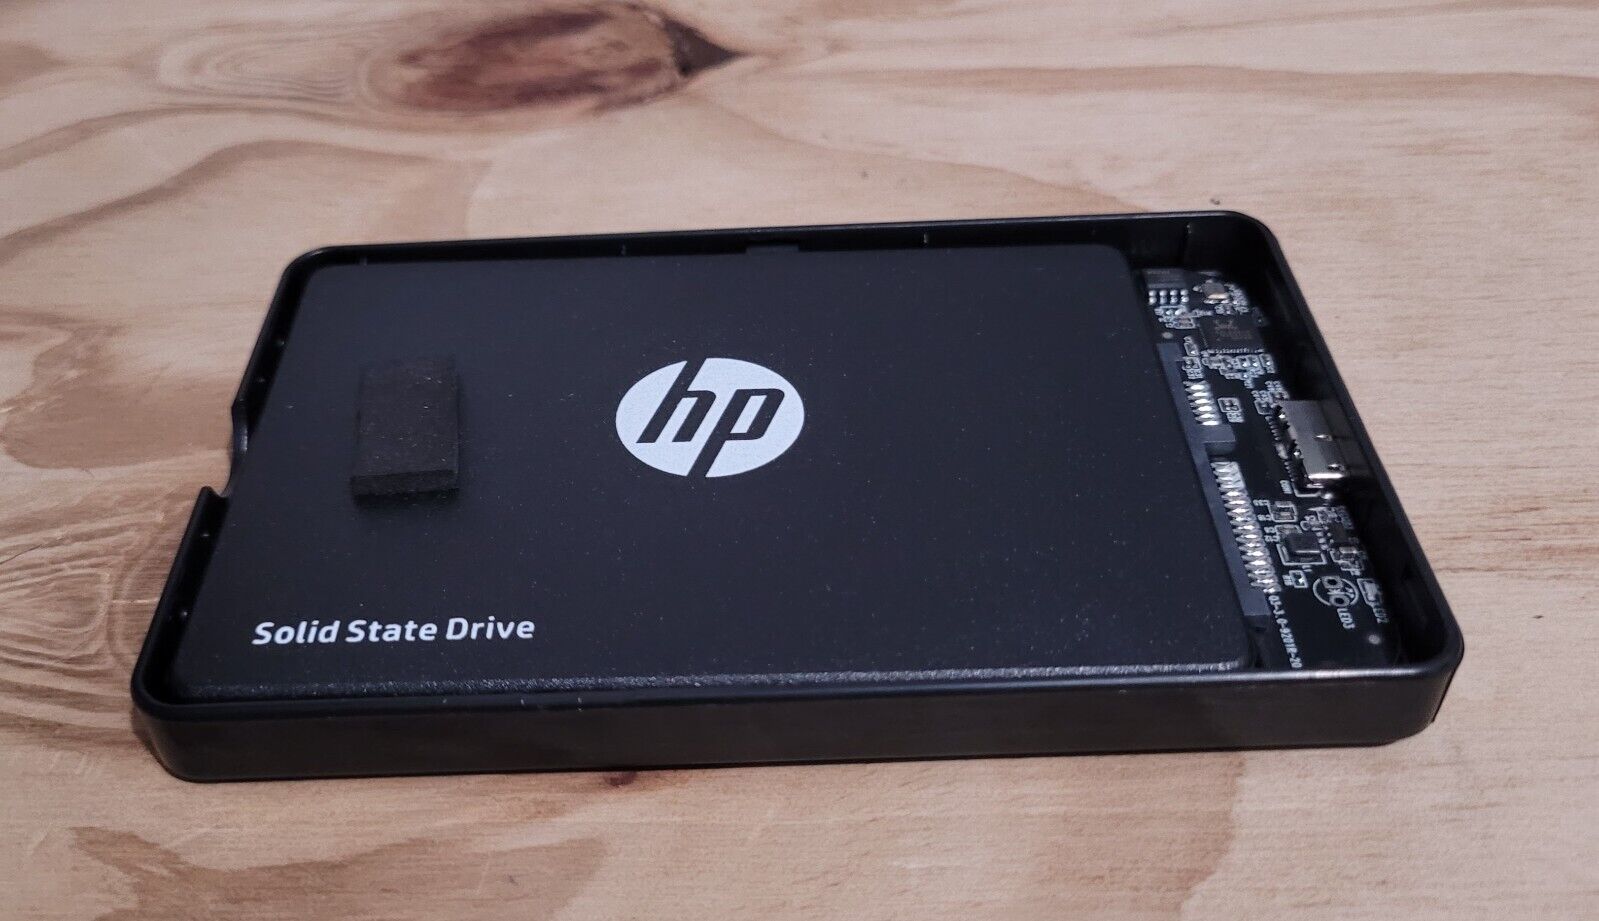 480Gb Hp SSD S650 2.5” Hard Drive & SATA USB 3.0 external hard drive enclosure.